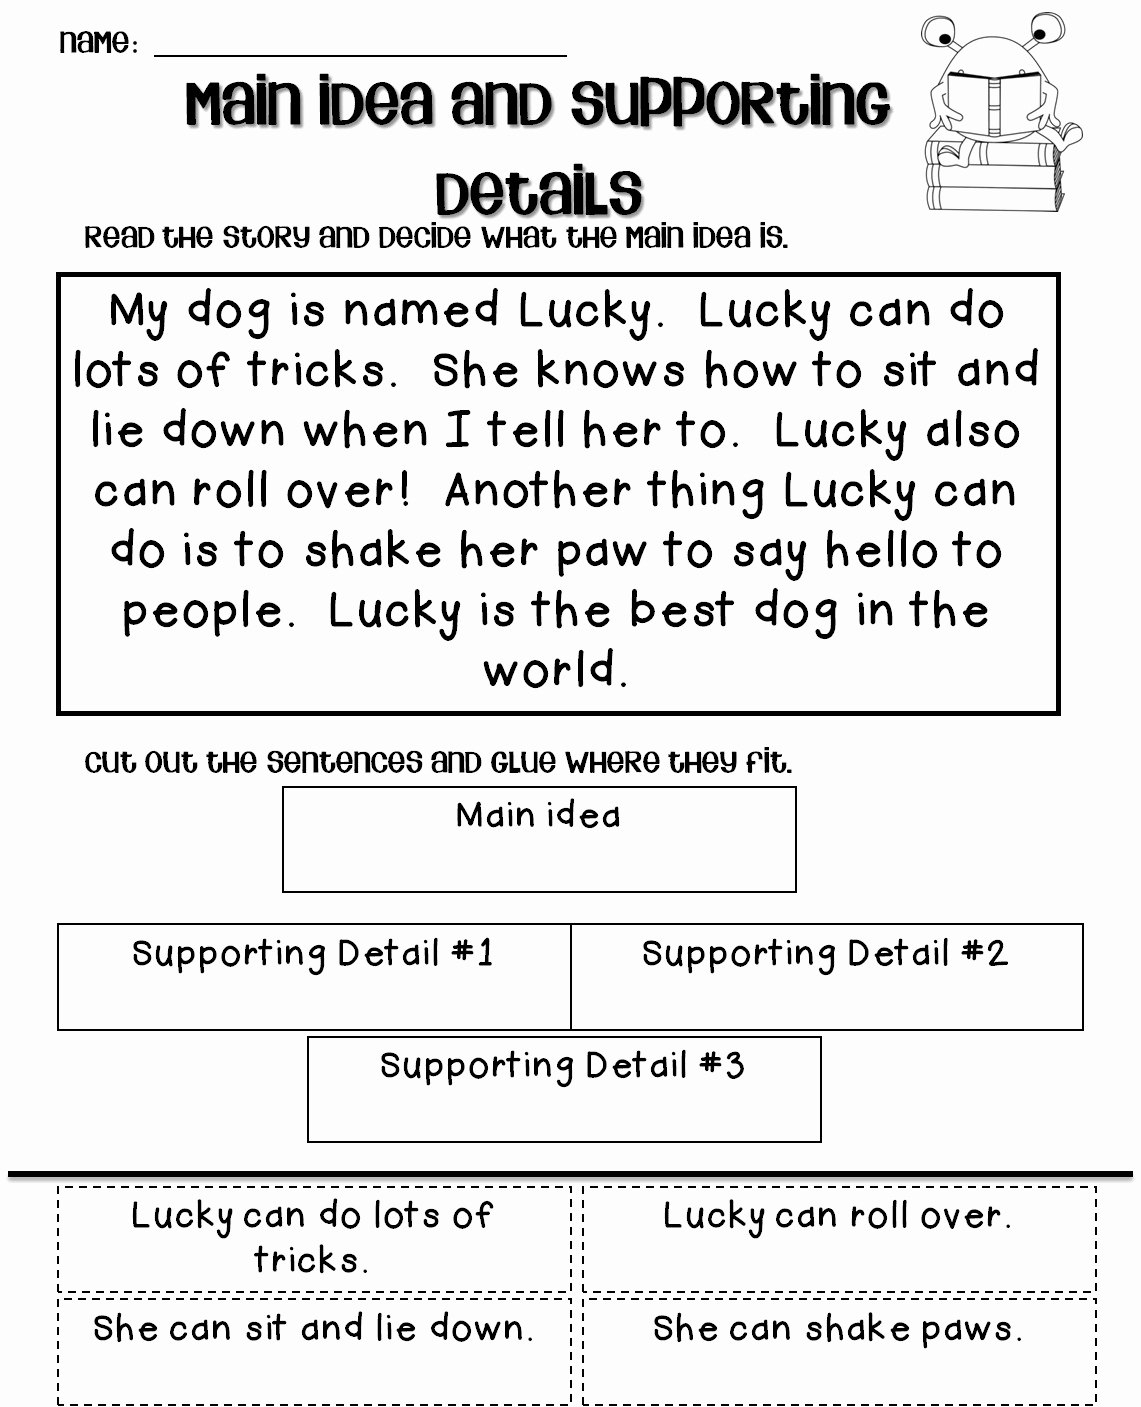 5th Grade Main Idea Worksheets Best Of 20 Main Idea Worksheet 5th Grade